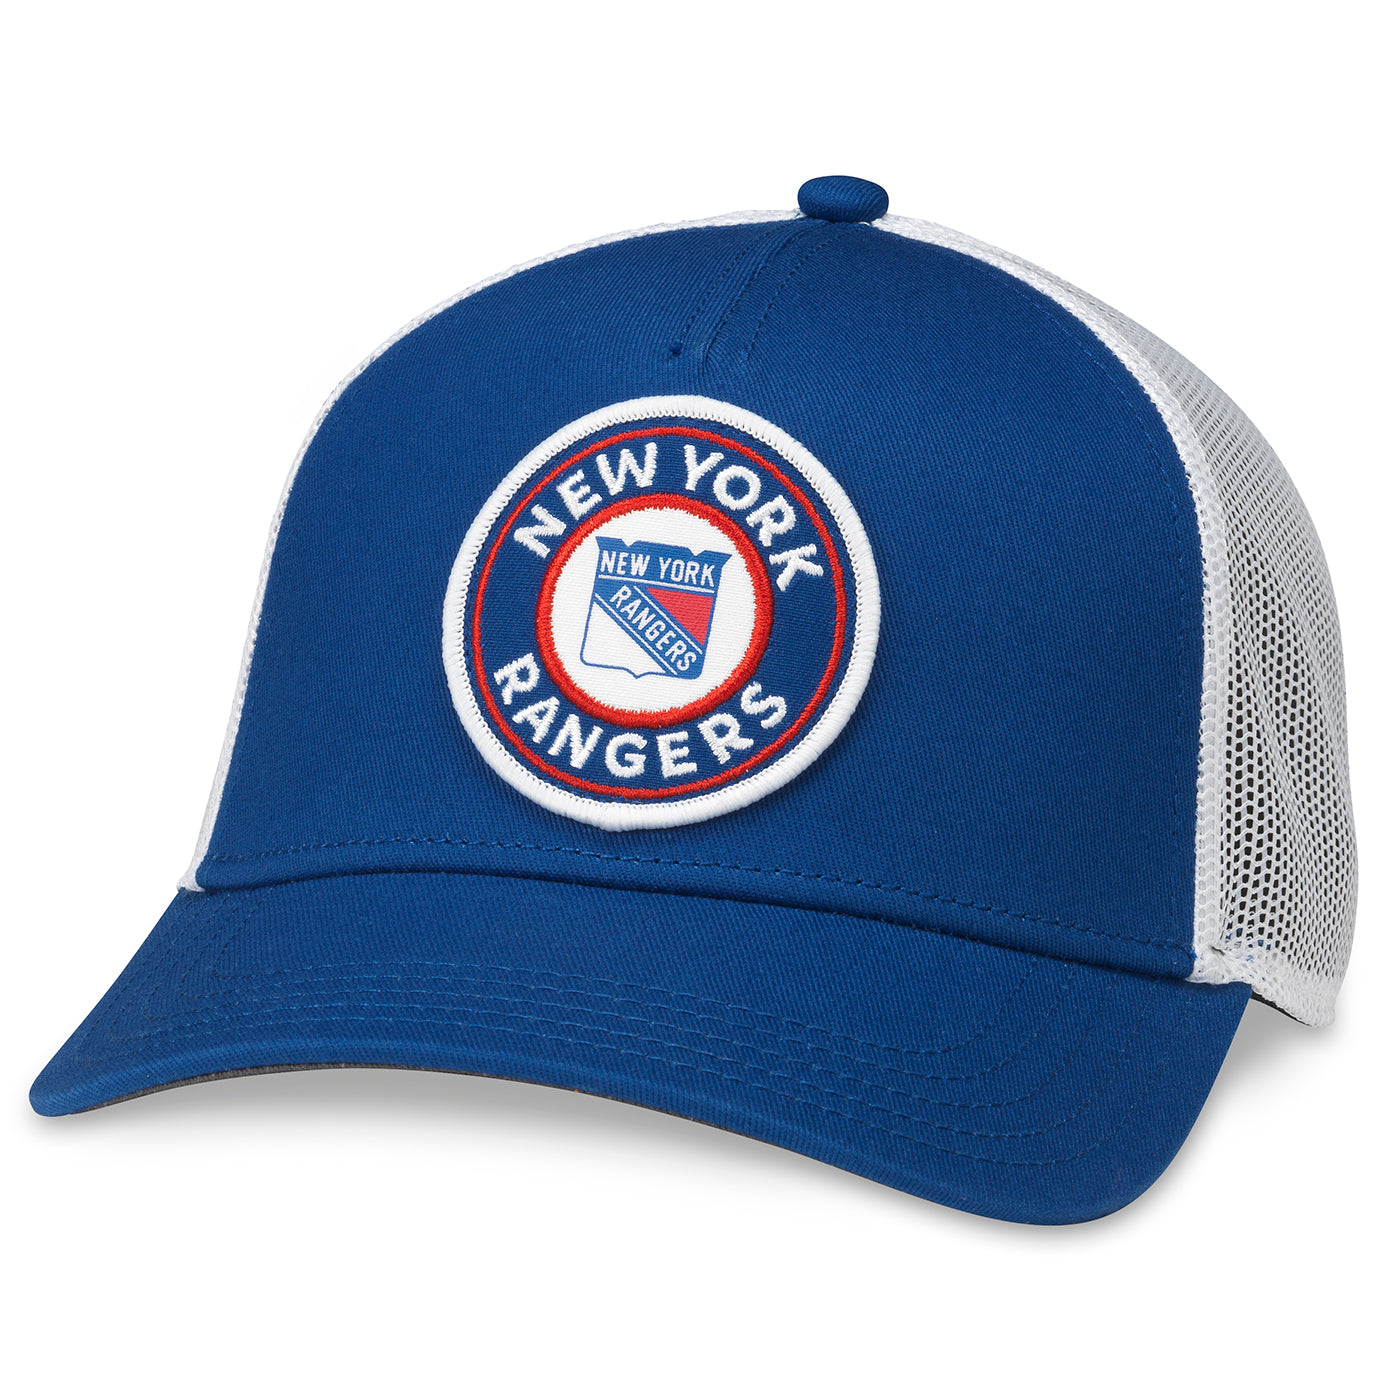 American Needle - Mens V GLDN Knt Valin Snapback Hat